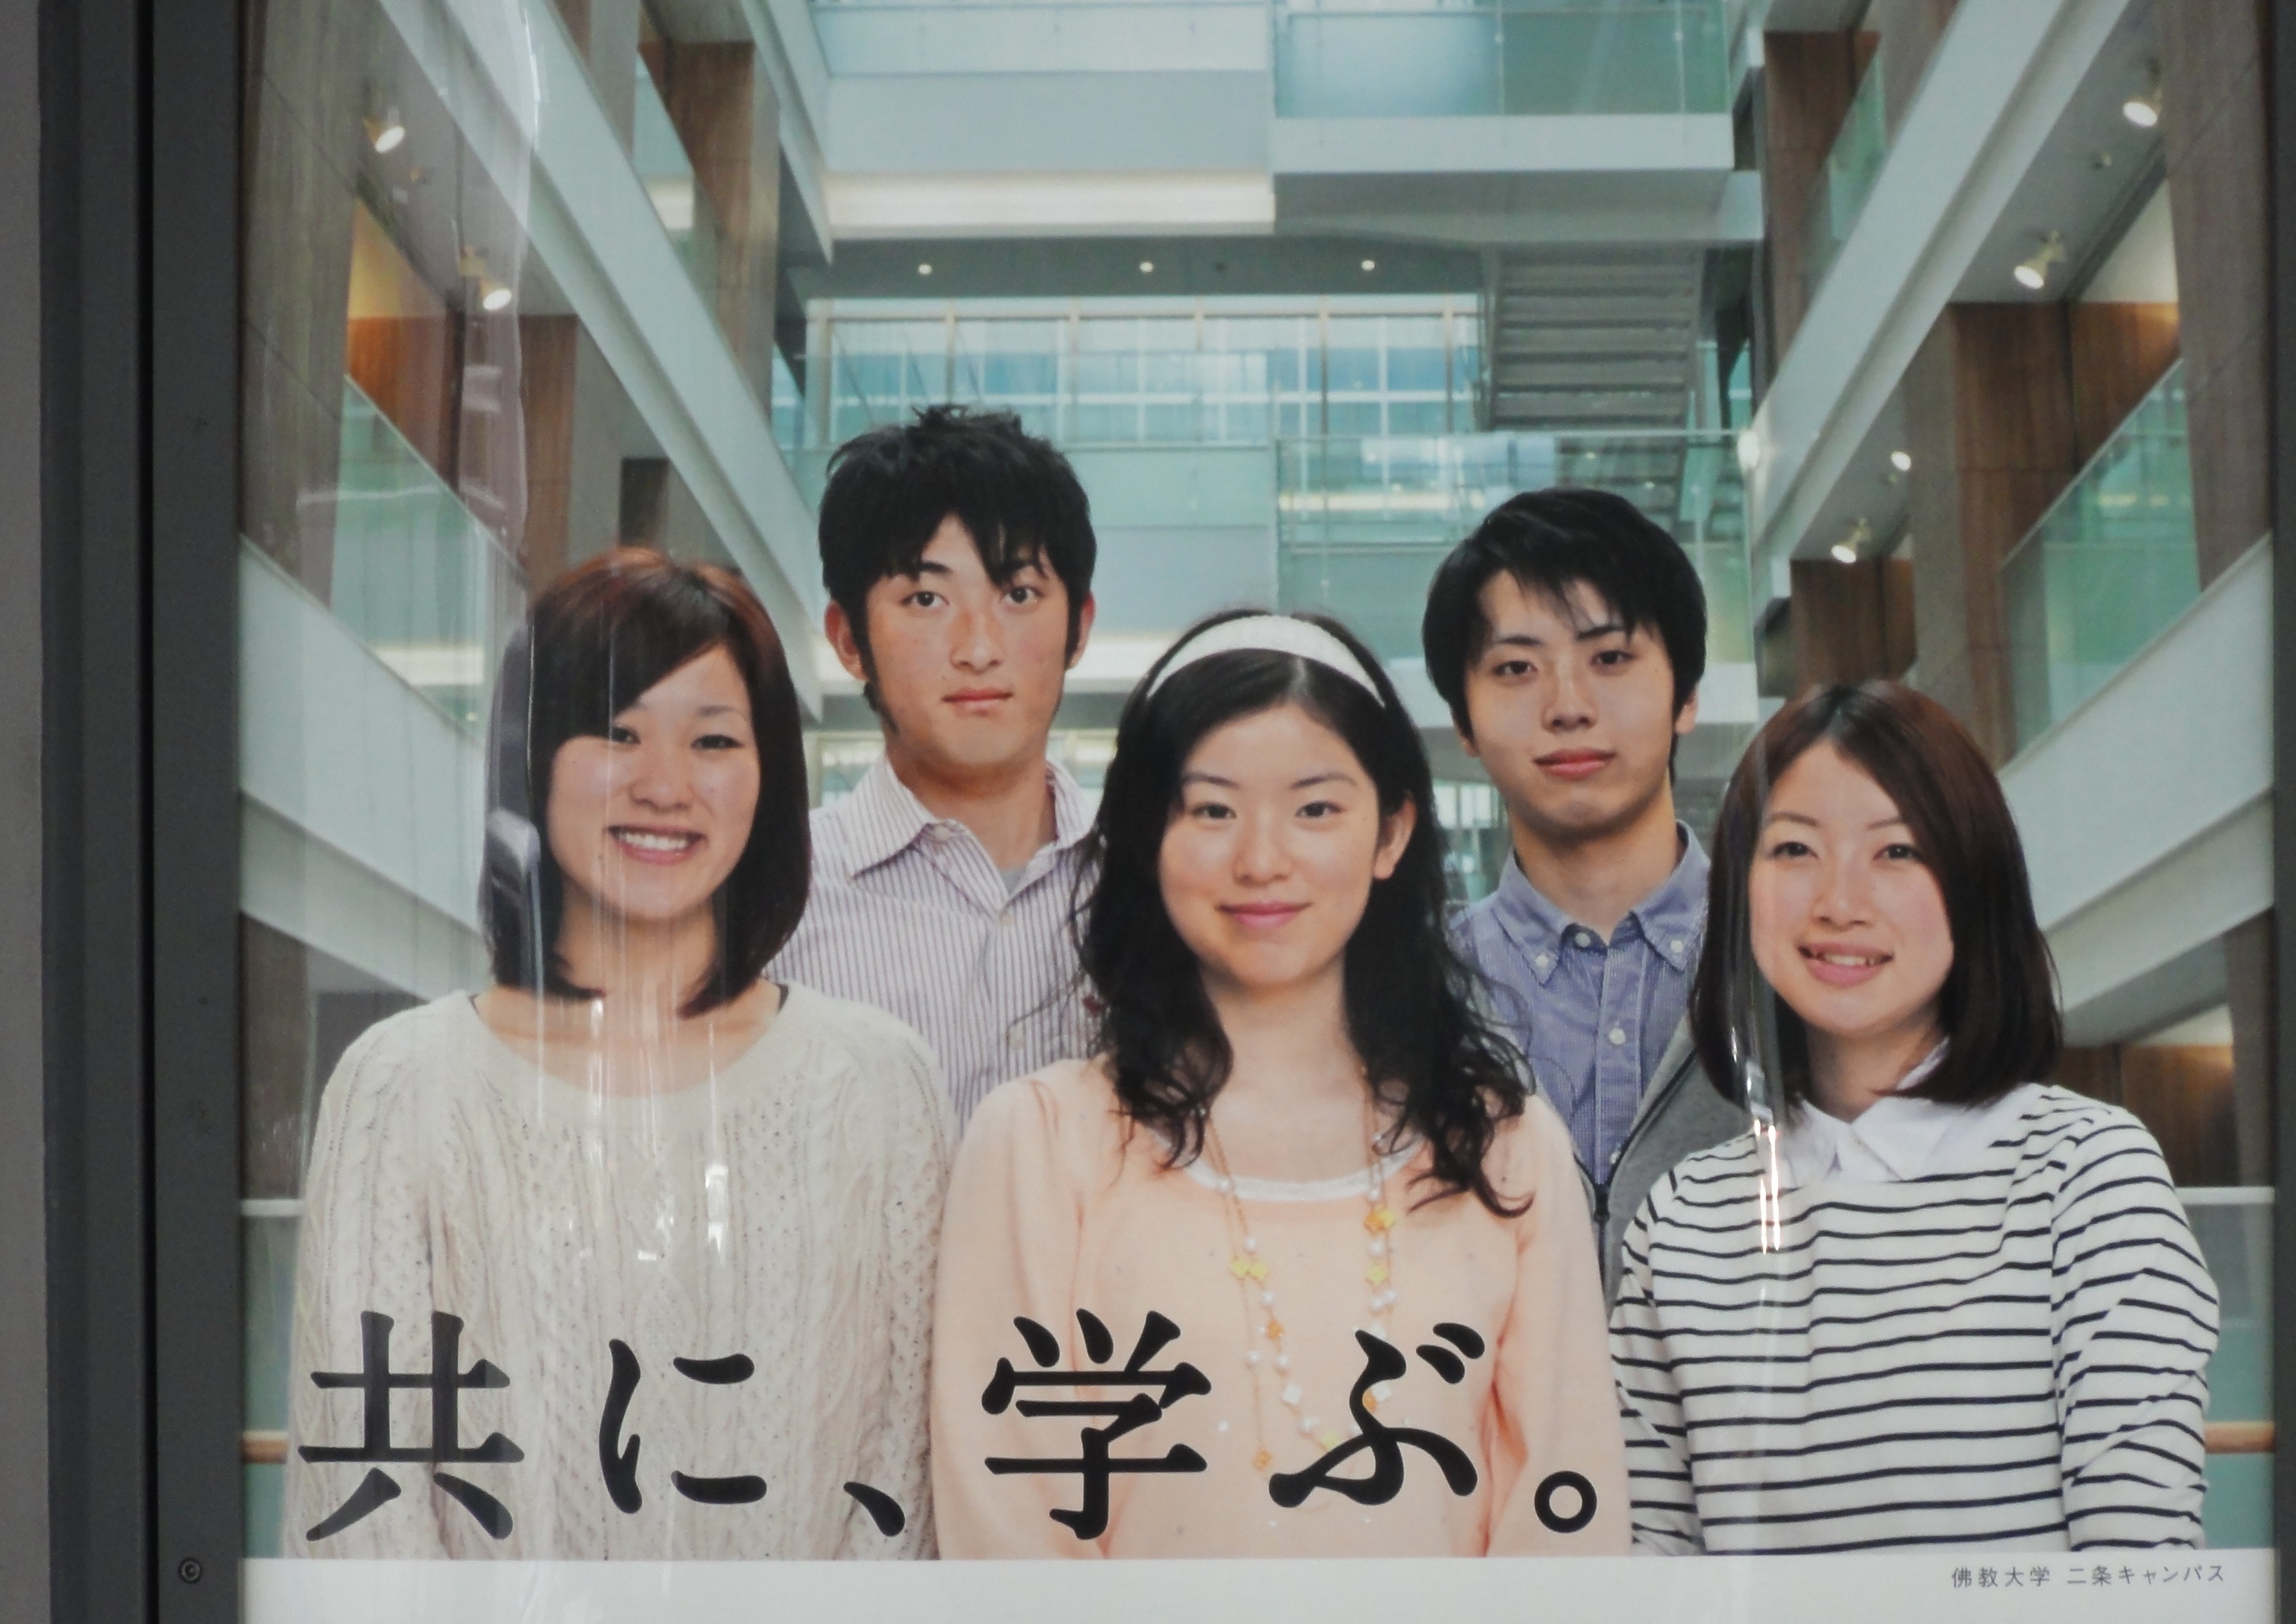 learn-kanji-Japanese-sign-university-students-281